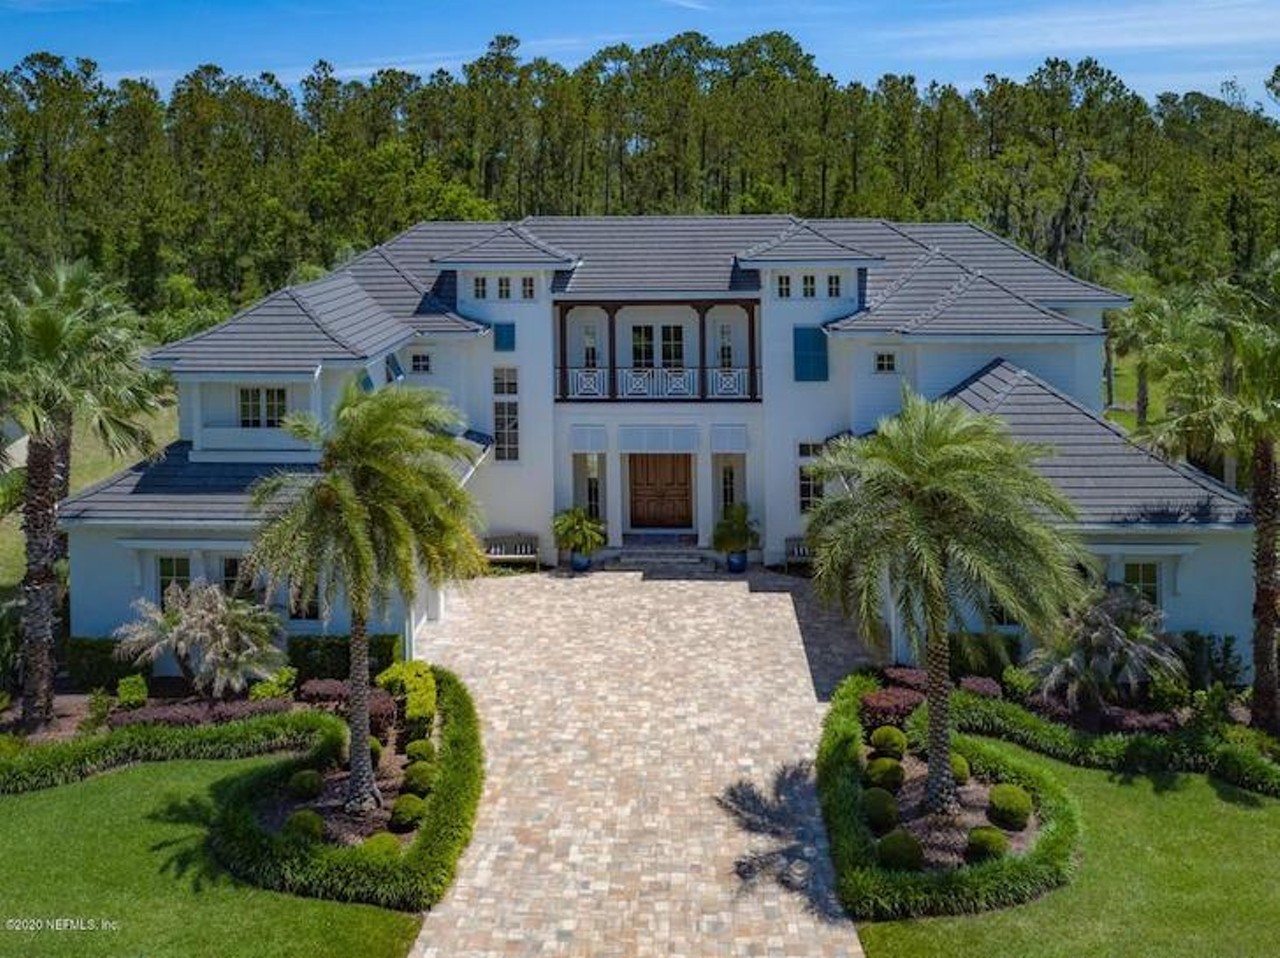 Former Jacksonville Jaguar QB Nick Foles is selling his Florida 'dream home'